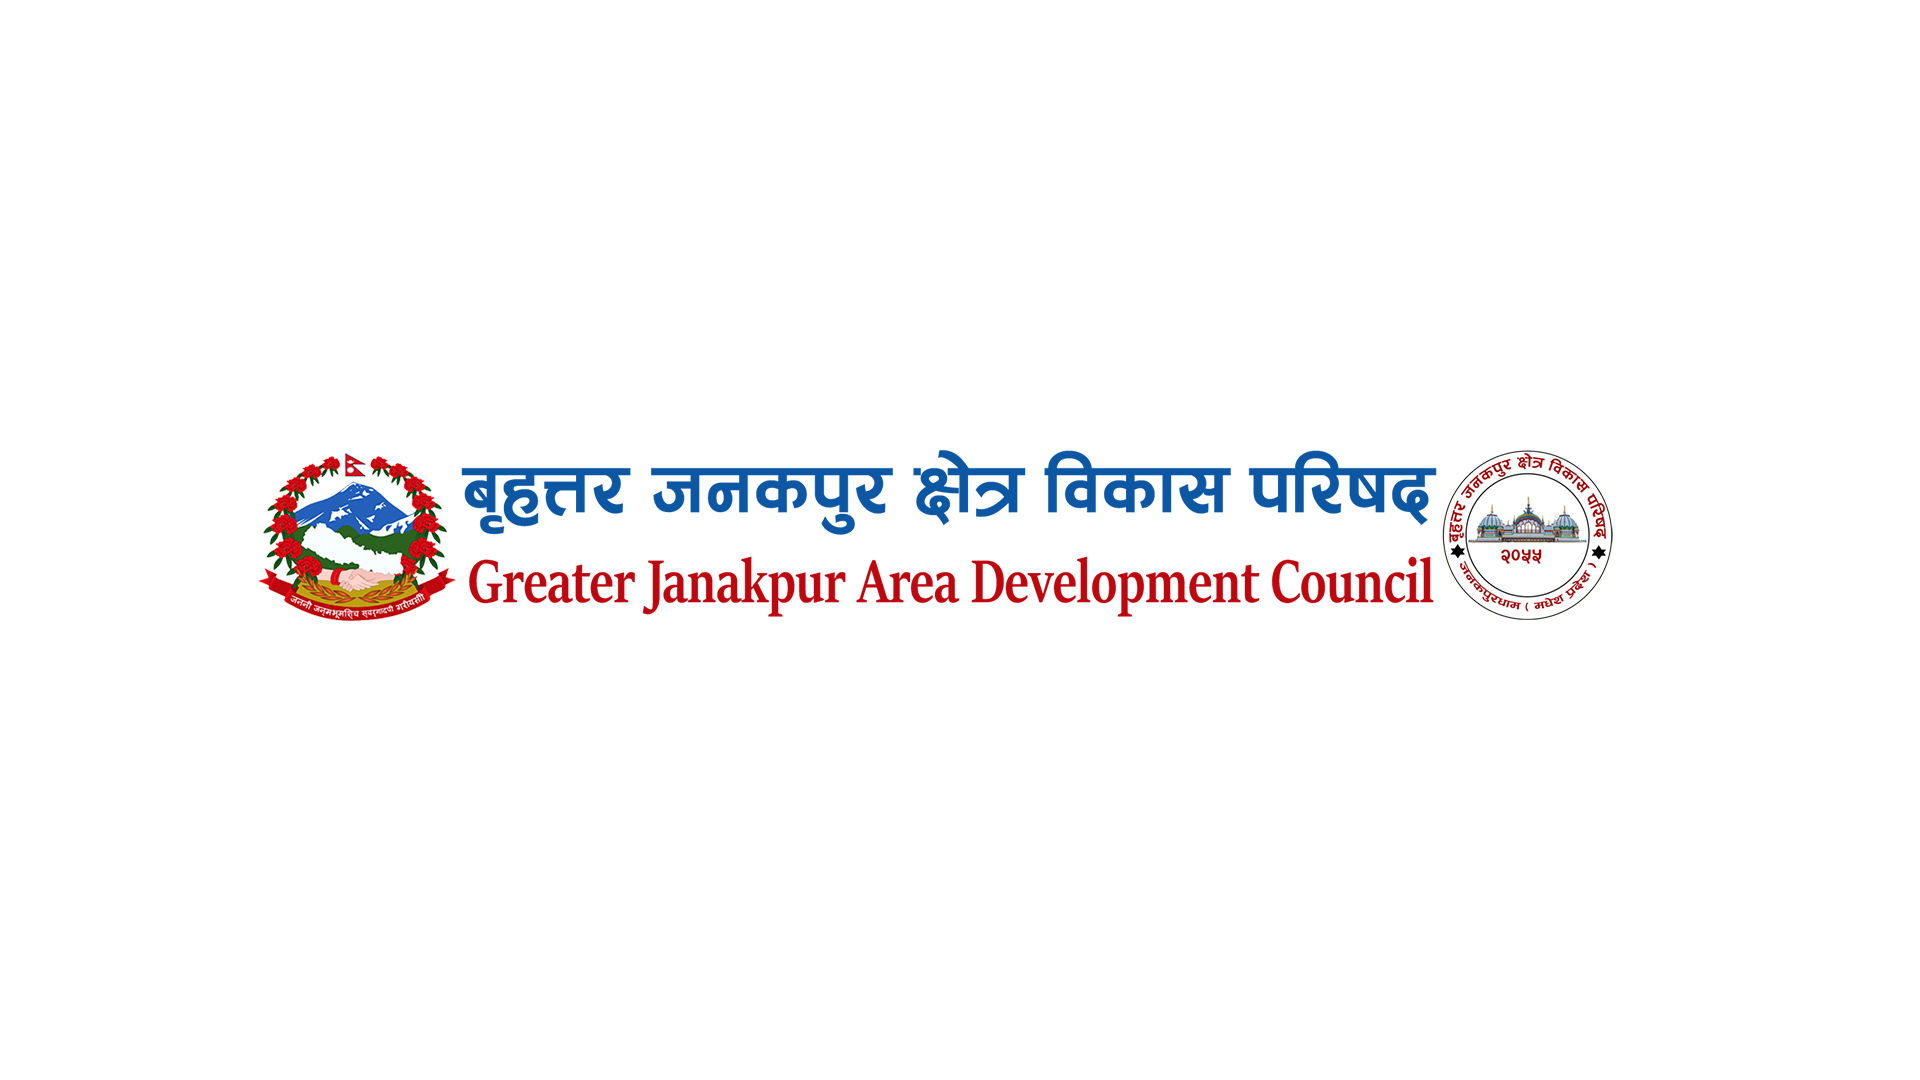 The Greater Janakpur Area Development Council